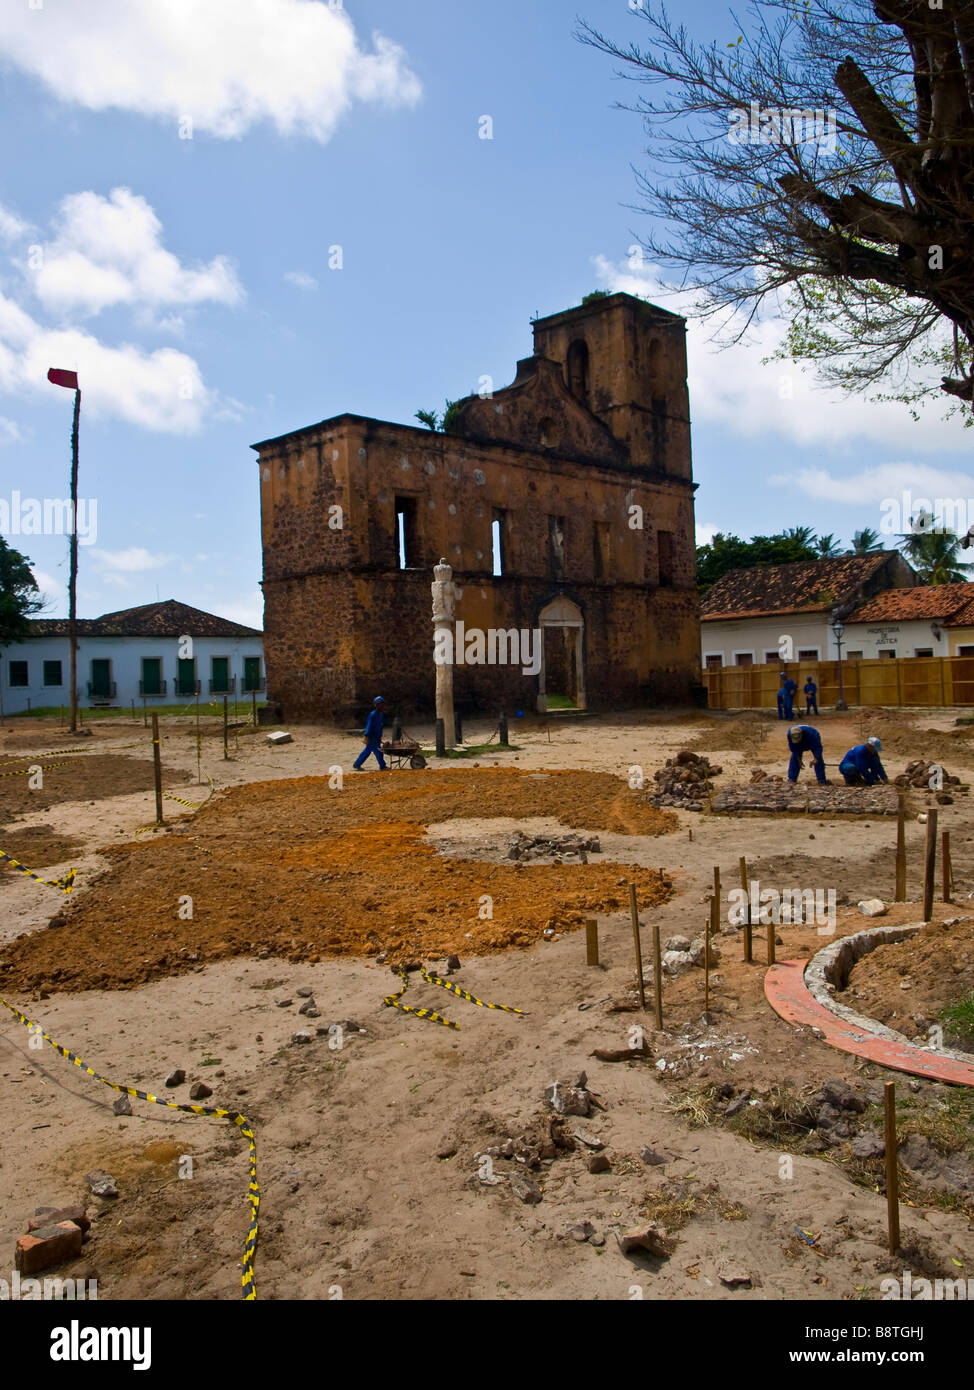 Renovation of the Pelourinho whipping post in the historical town of Alcântara, Maranhão state, Brazil Stock Photo